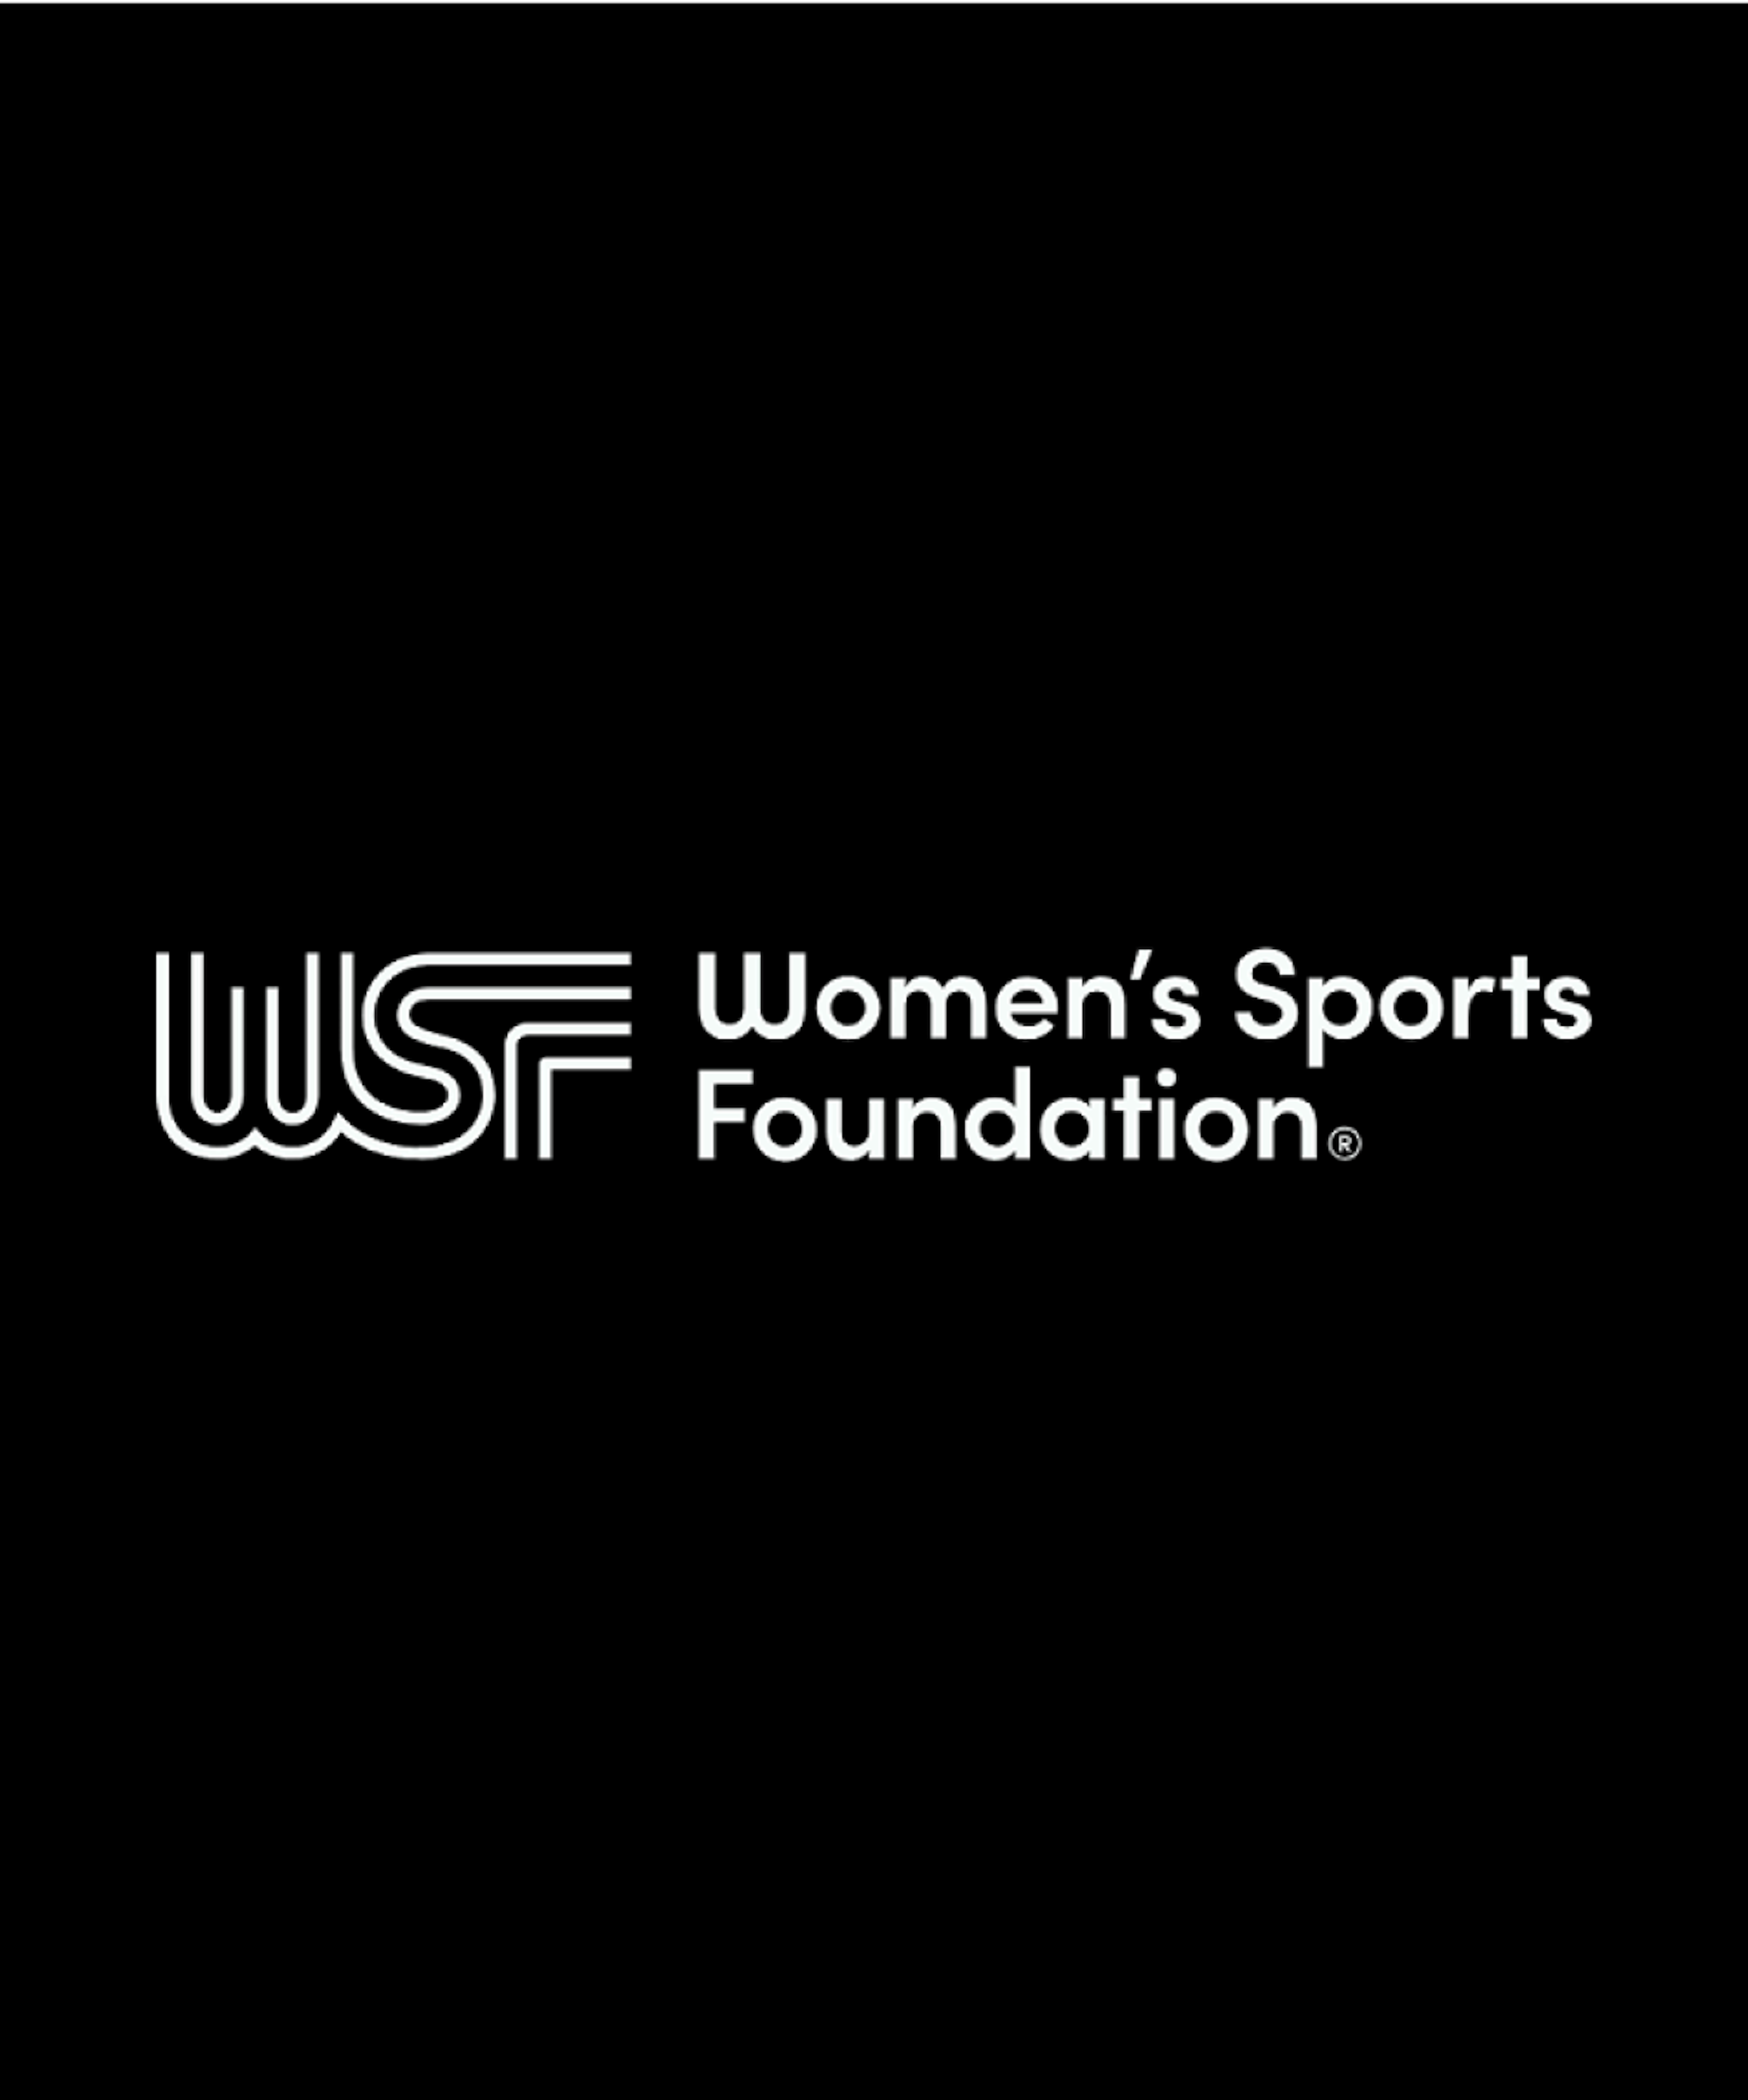 Women's sports foundation logo